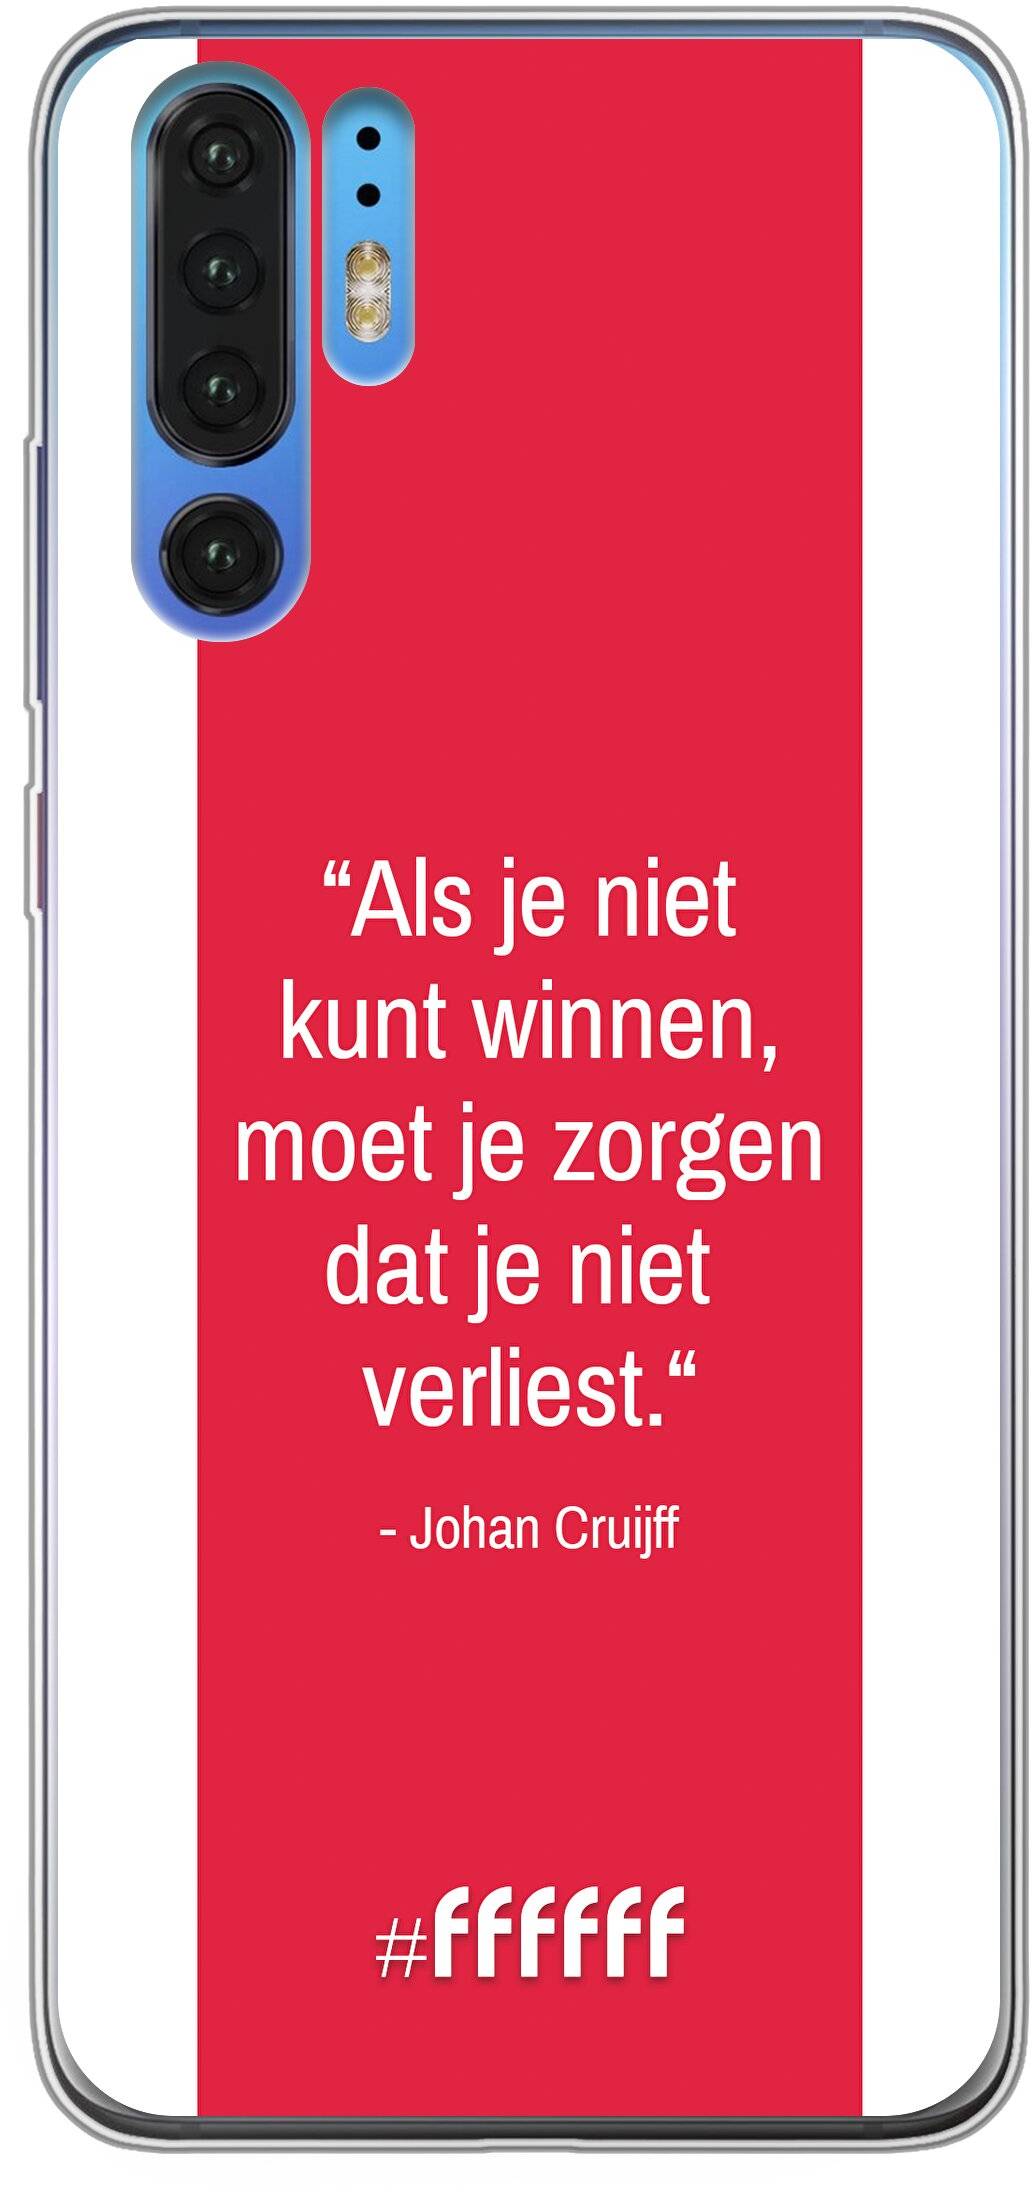 AFC Ajax Quote Johan Cruijff P30 Pro